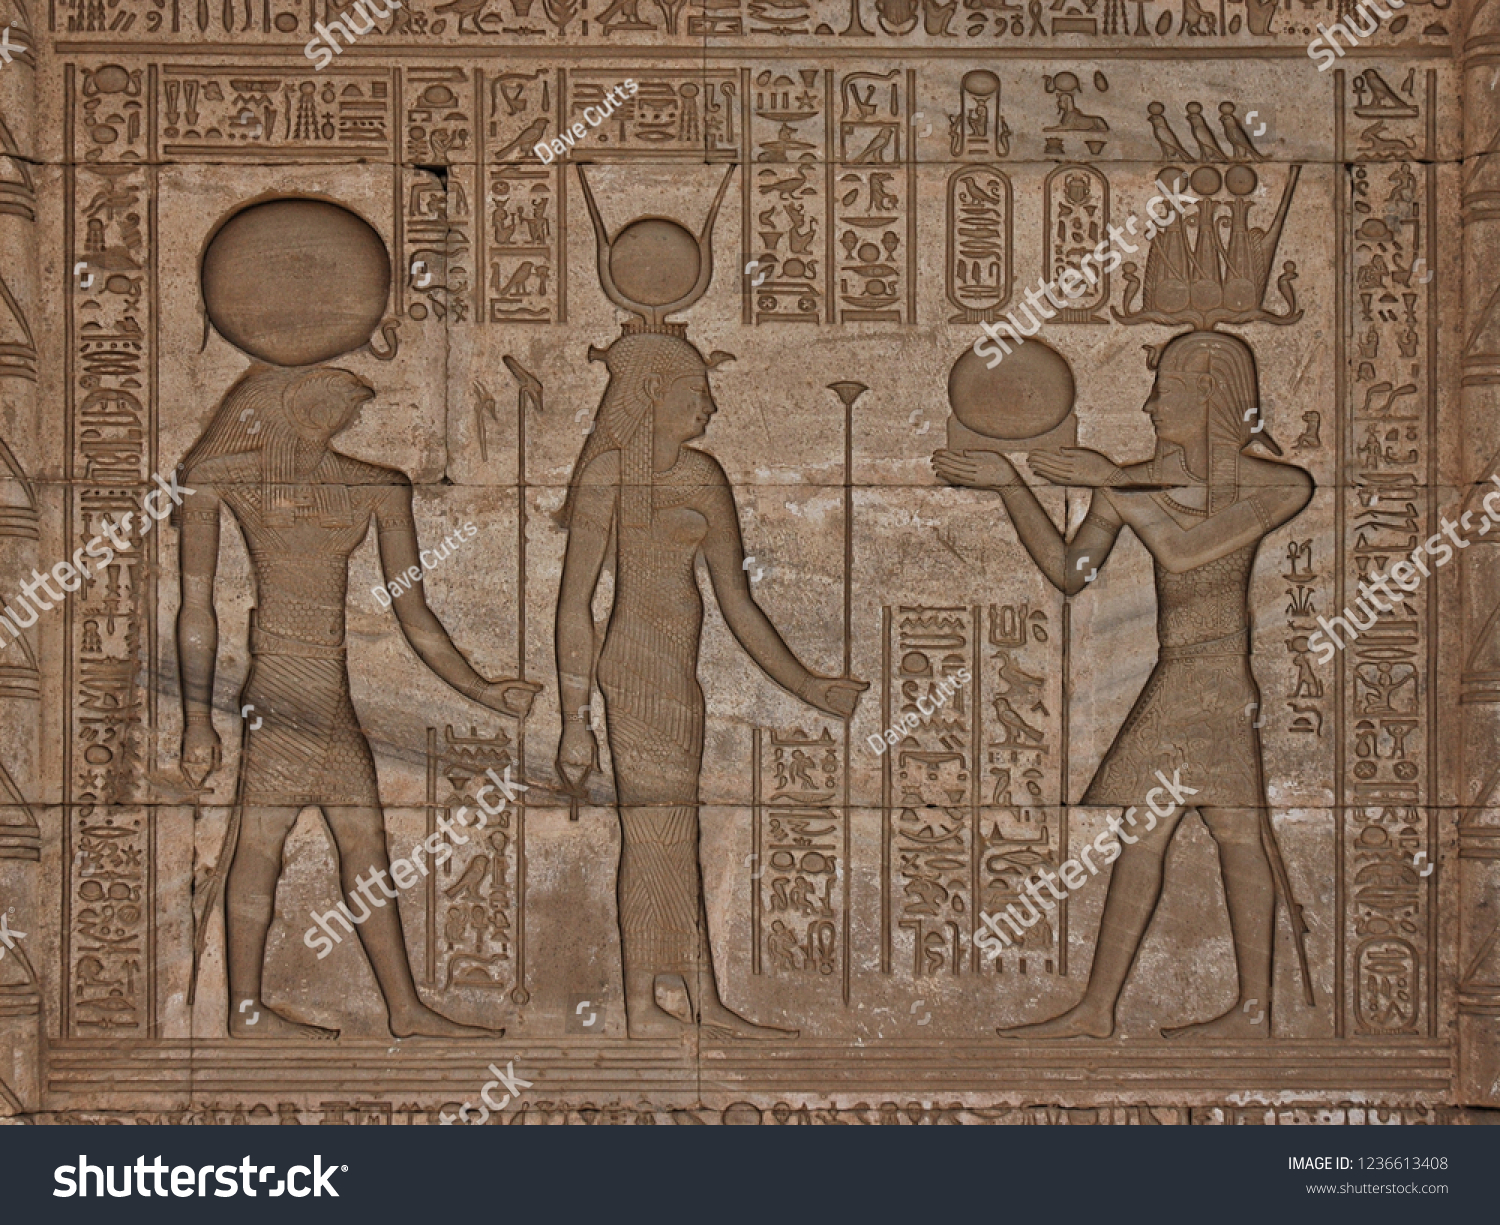 stock-photo-egyptian-hieroglyphics-of-ra-and-hathor-and-cartouche-1236613408.jpg